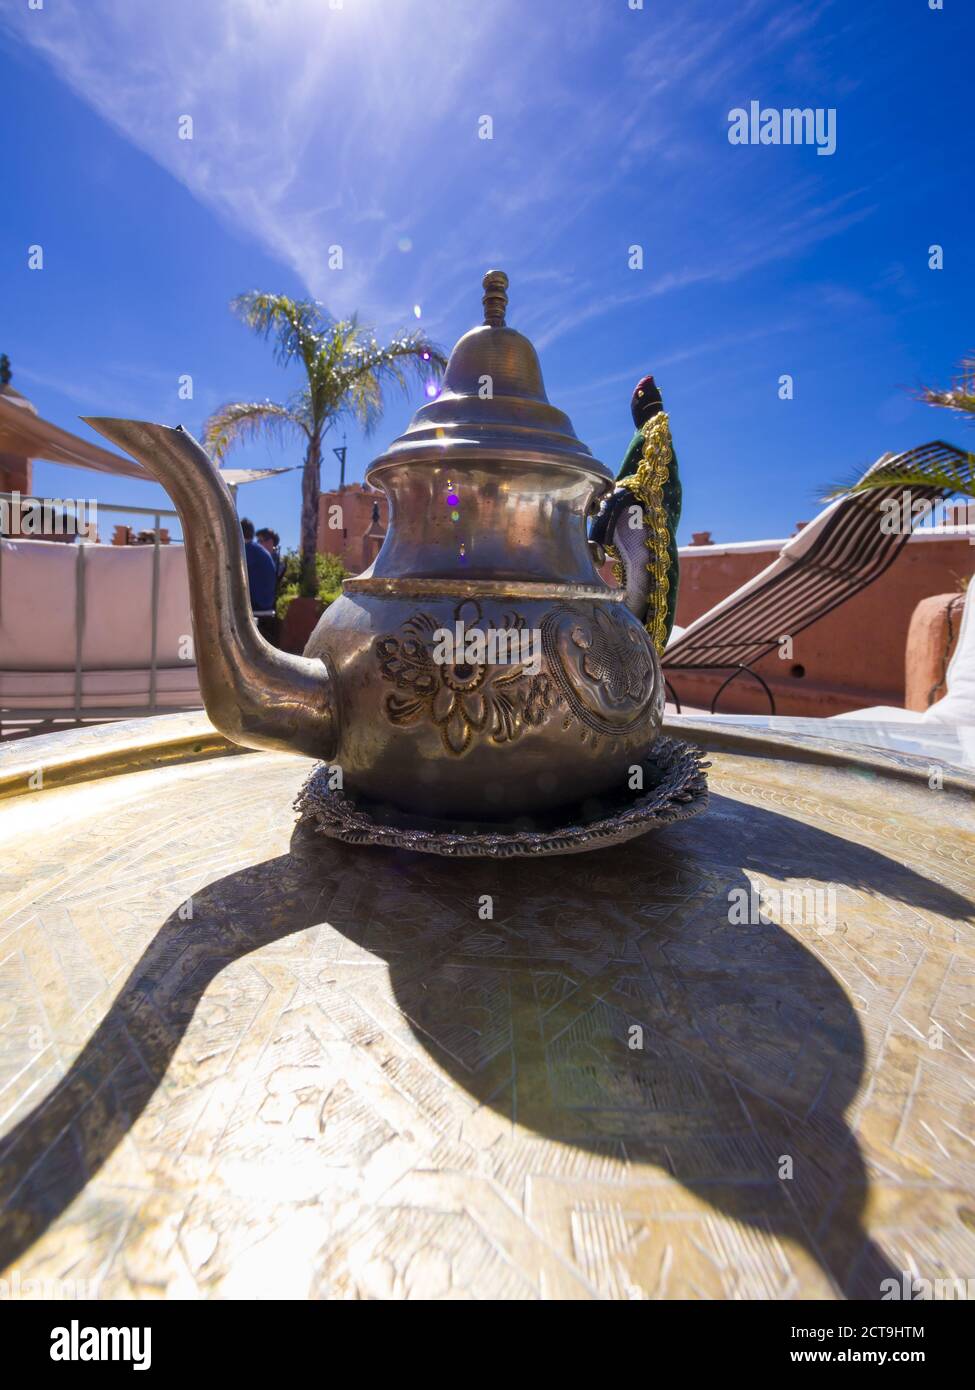 Morocco, Marrakesh-Tensift-El Haouz, moroccan teapot Stock Photo